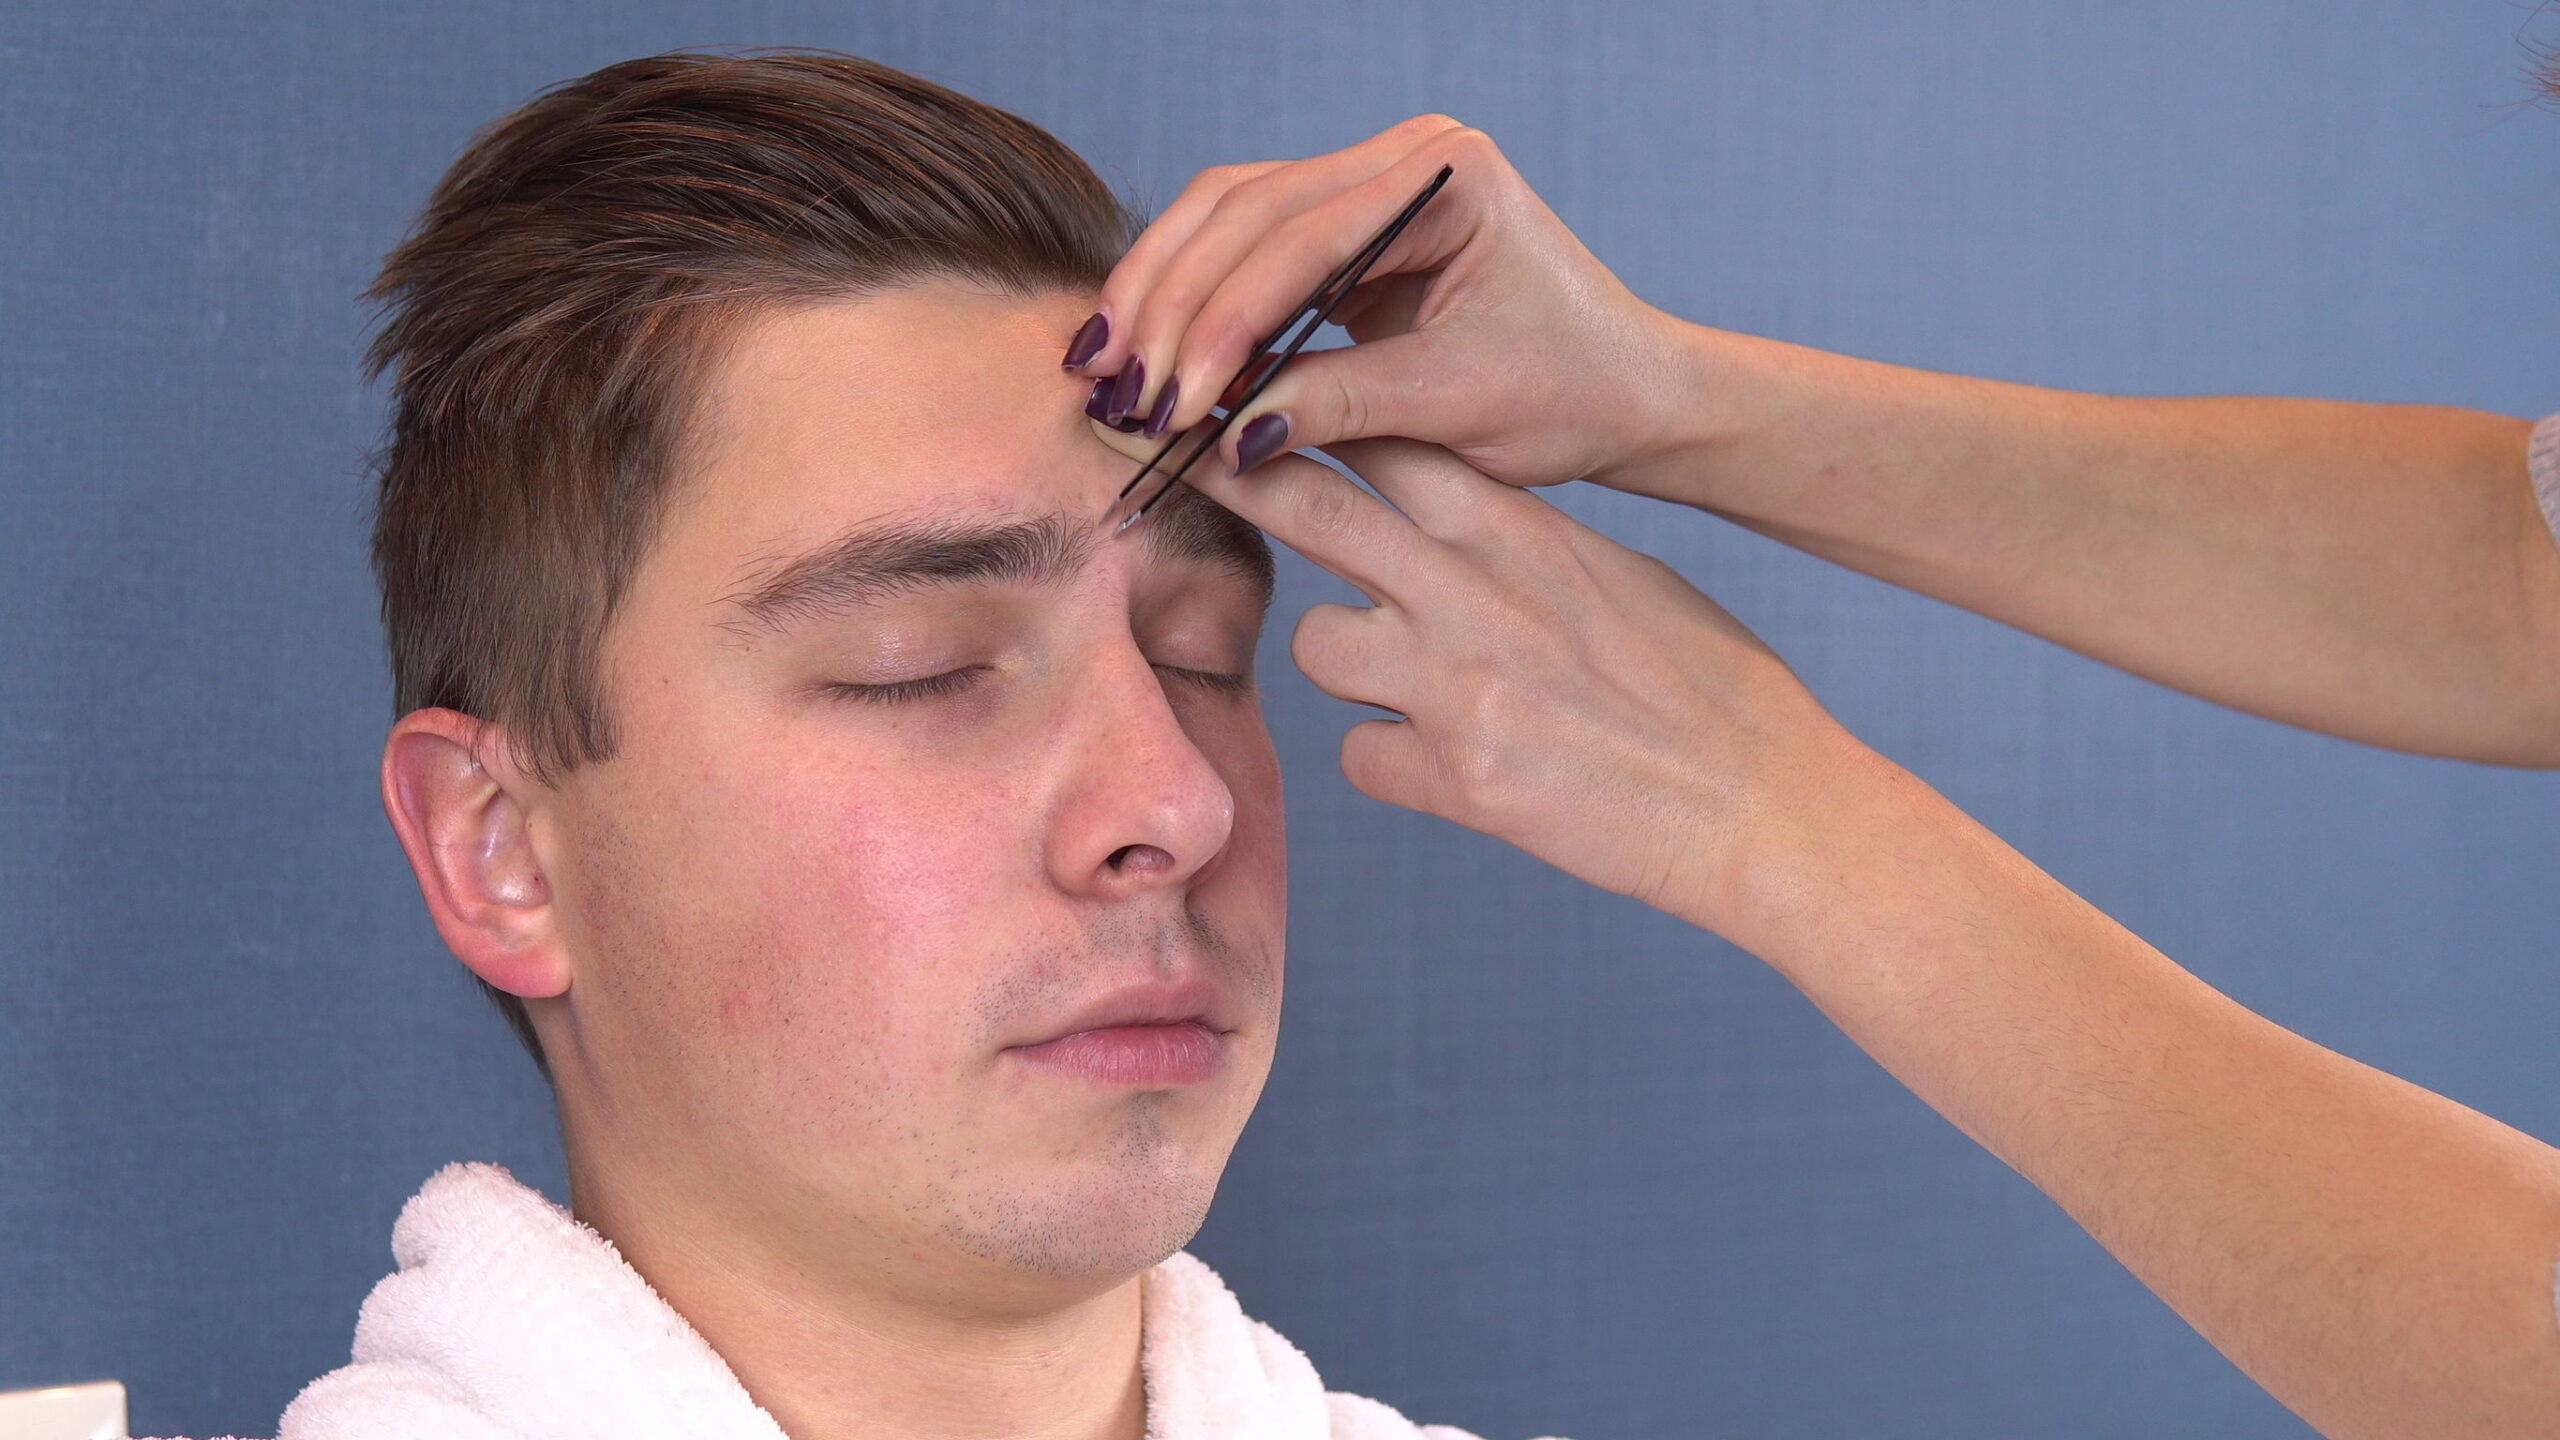 Tweezing hair removal for men